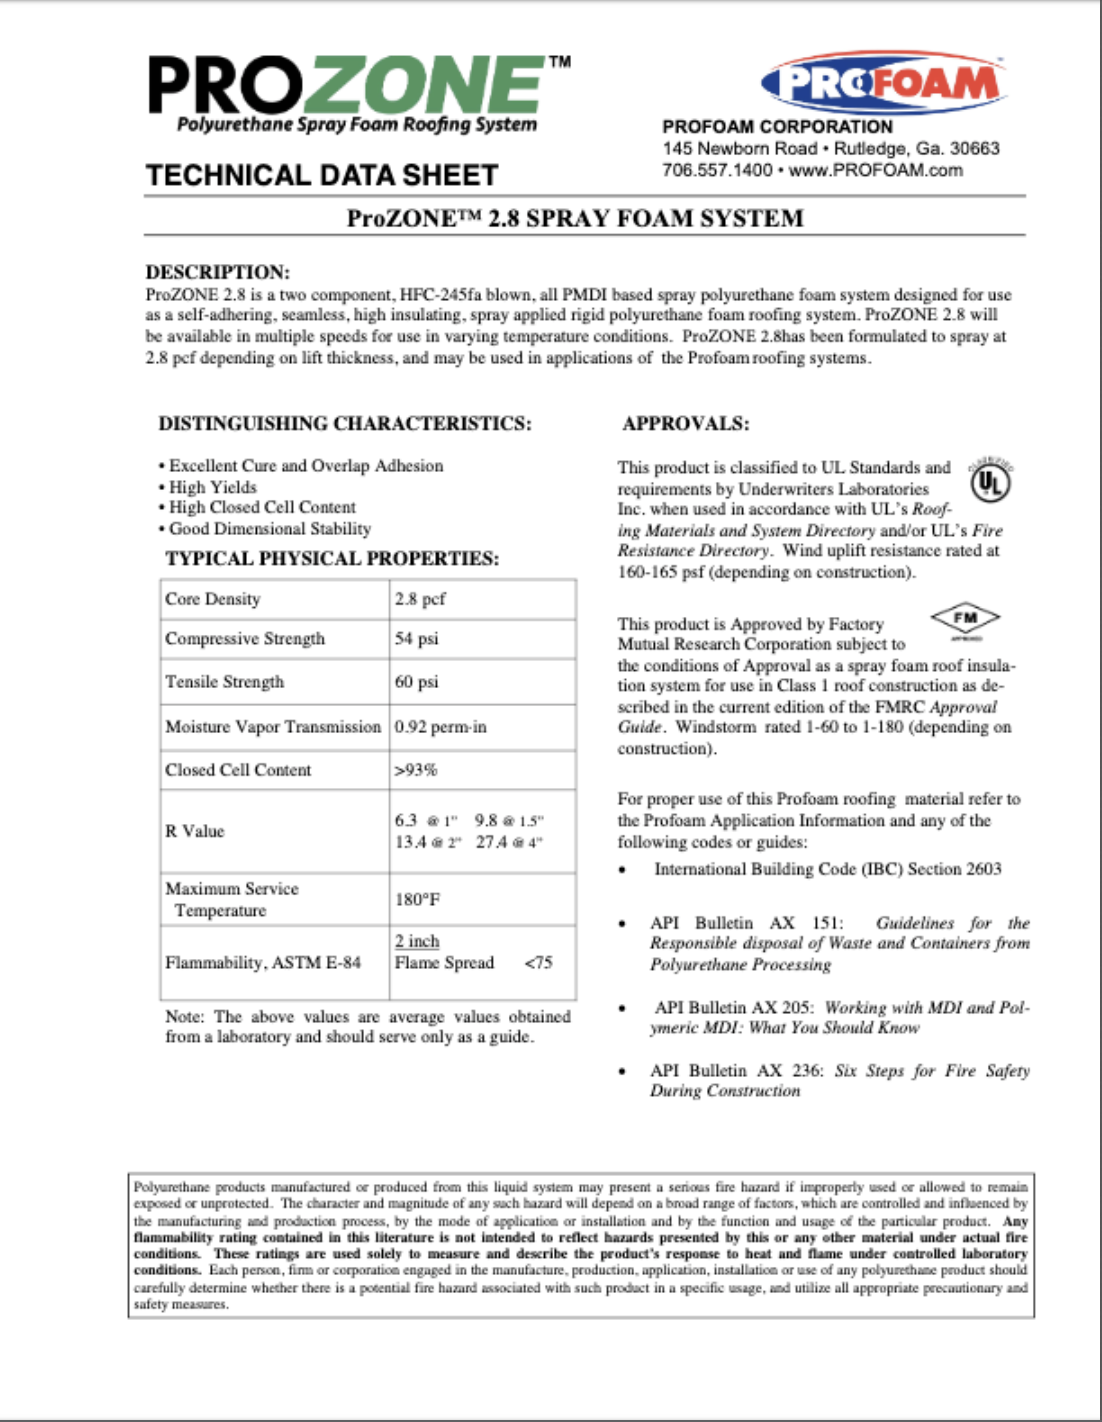 ProZone 3.0 Spray Foam Technical Data Sheet (TDS)